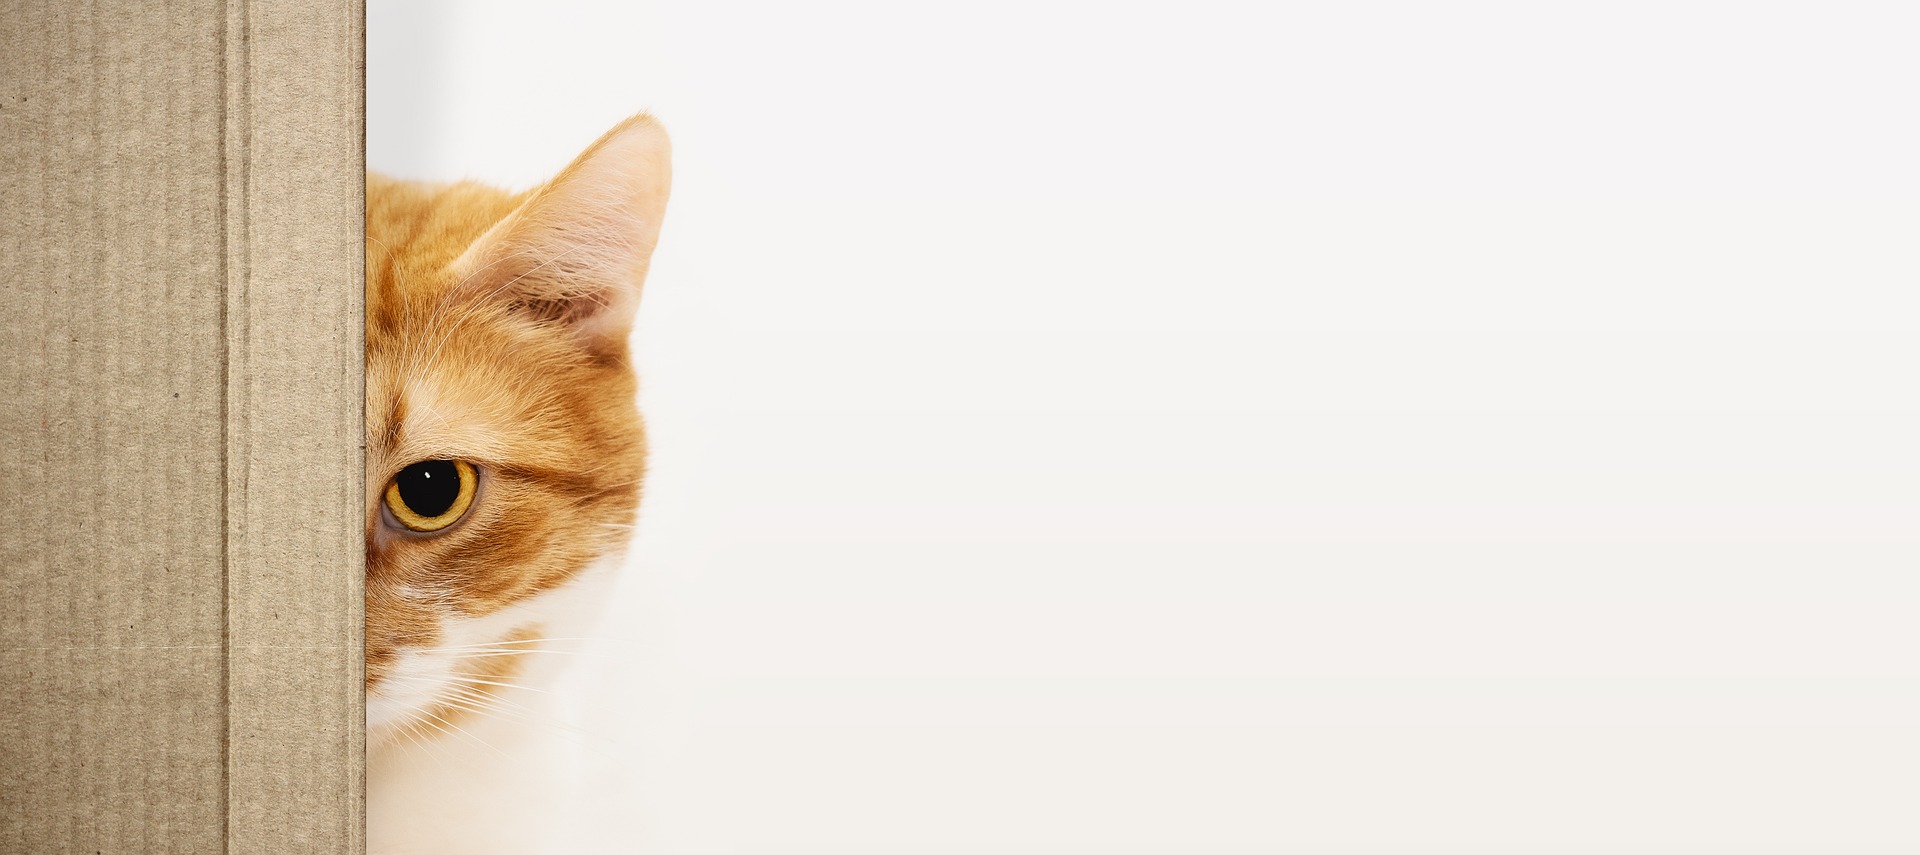 WordPressのアイキャッチ画像、サムネイル画像の切り分け方法を見つめる猫ちゃん。